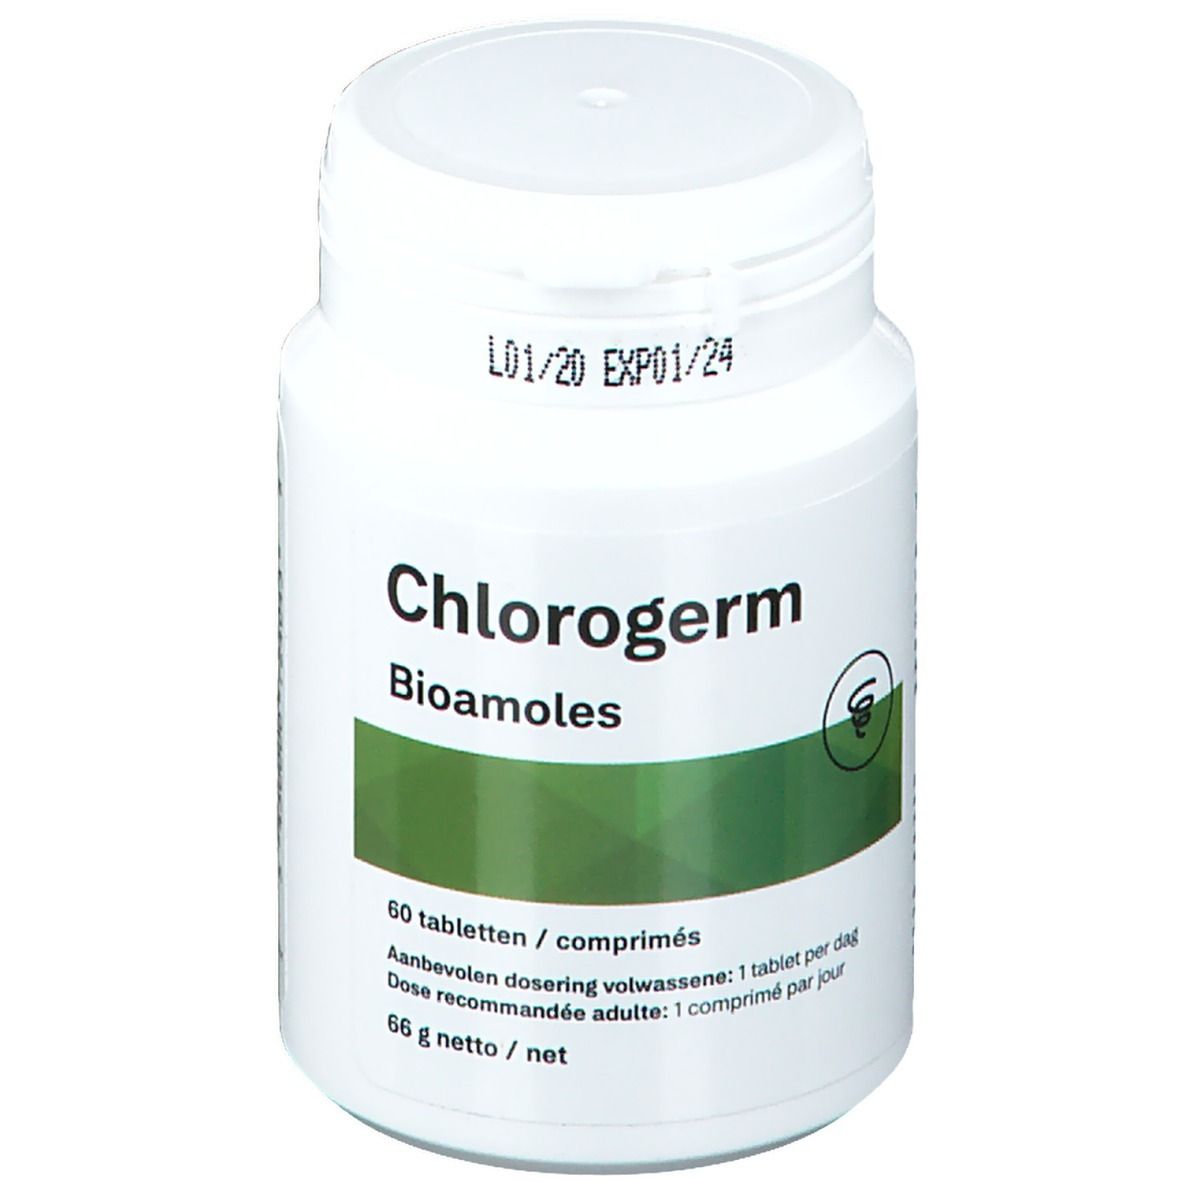 Image of Chlorogerm Bioamoles